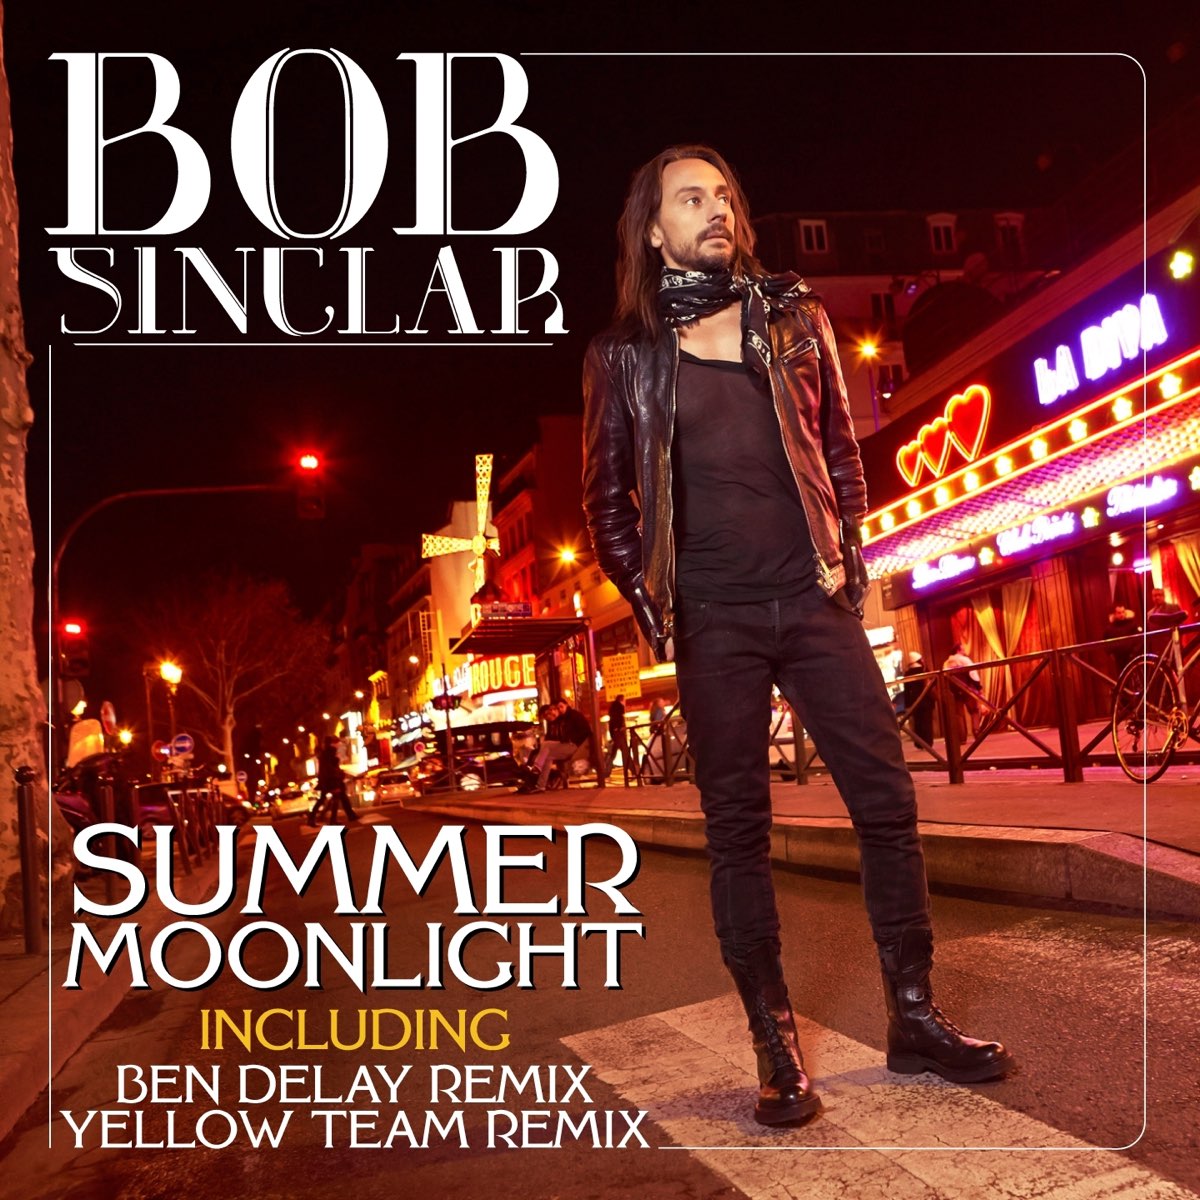 Summer Moonlight - EP by Bob Sinclar on Apple Music.